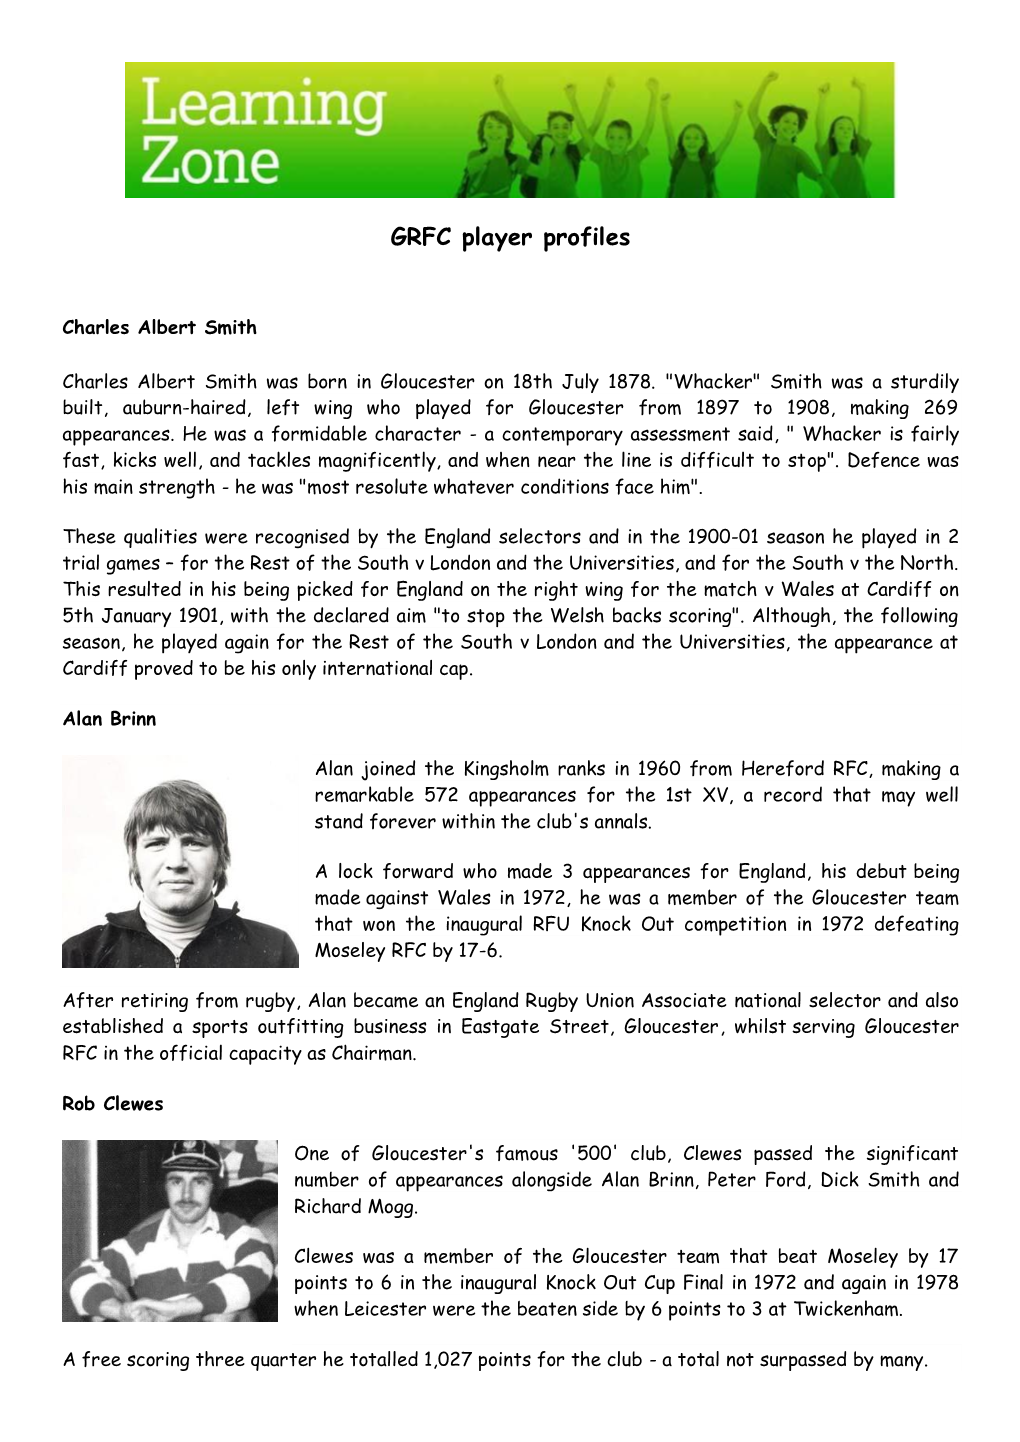 GRFC Player Profiles